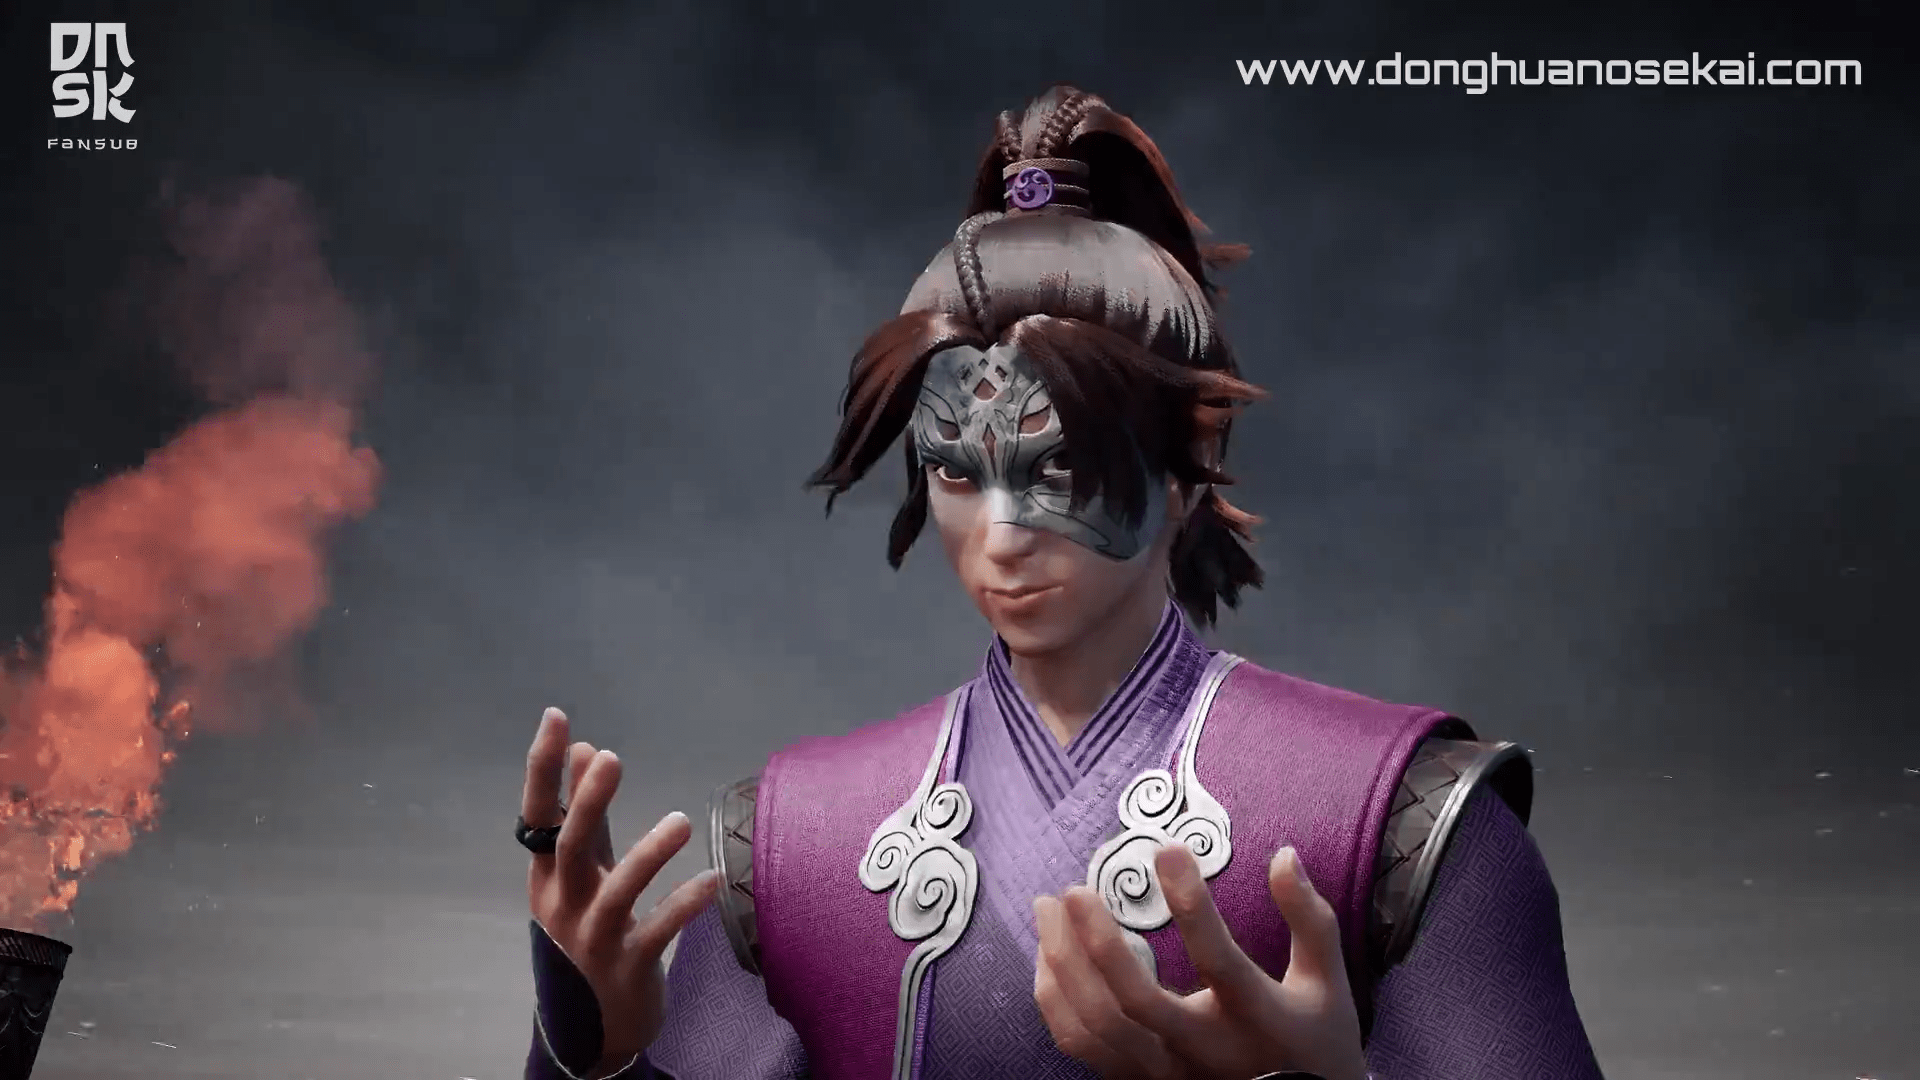 Assistir Wu Shang Shen Di - 2ª Temporada Online